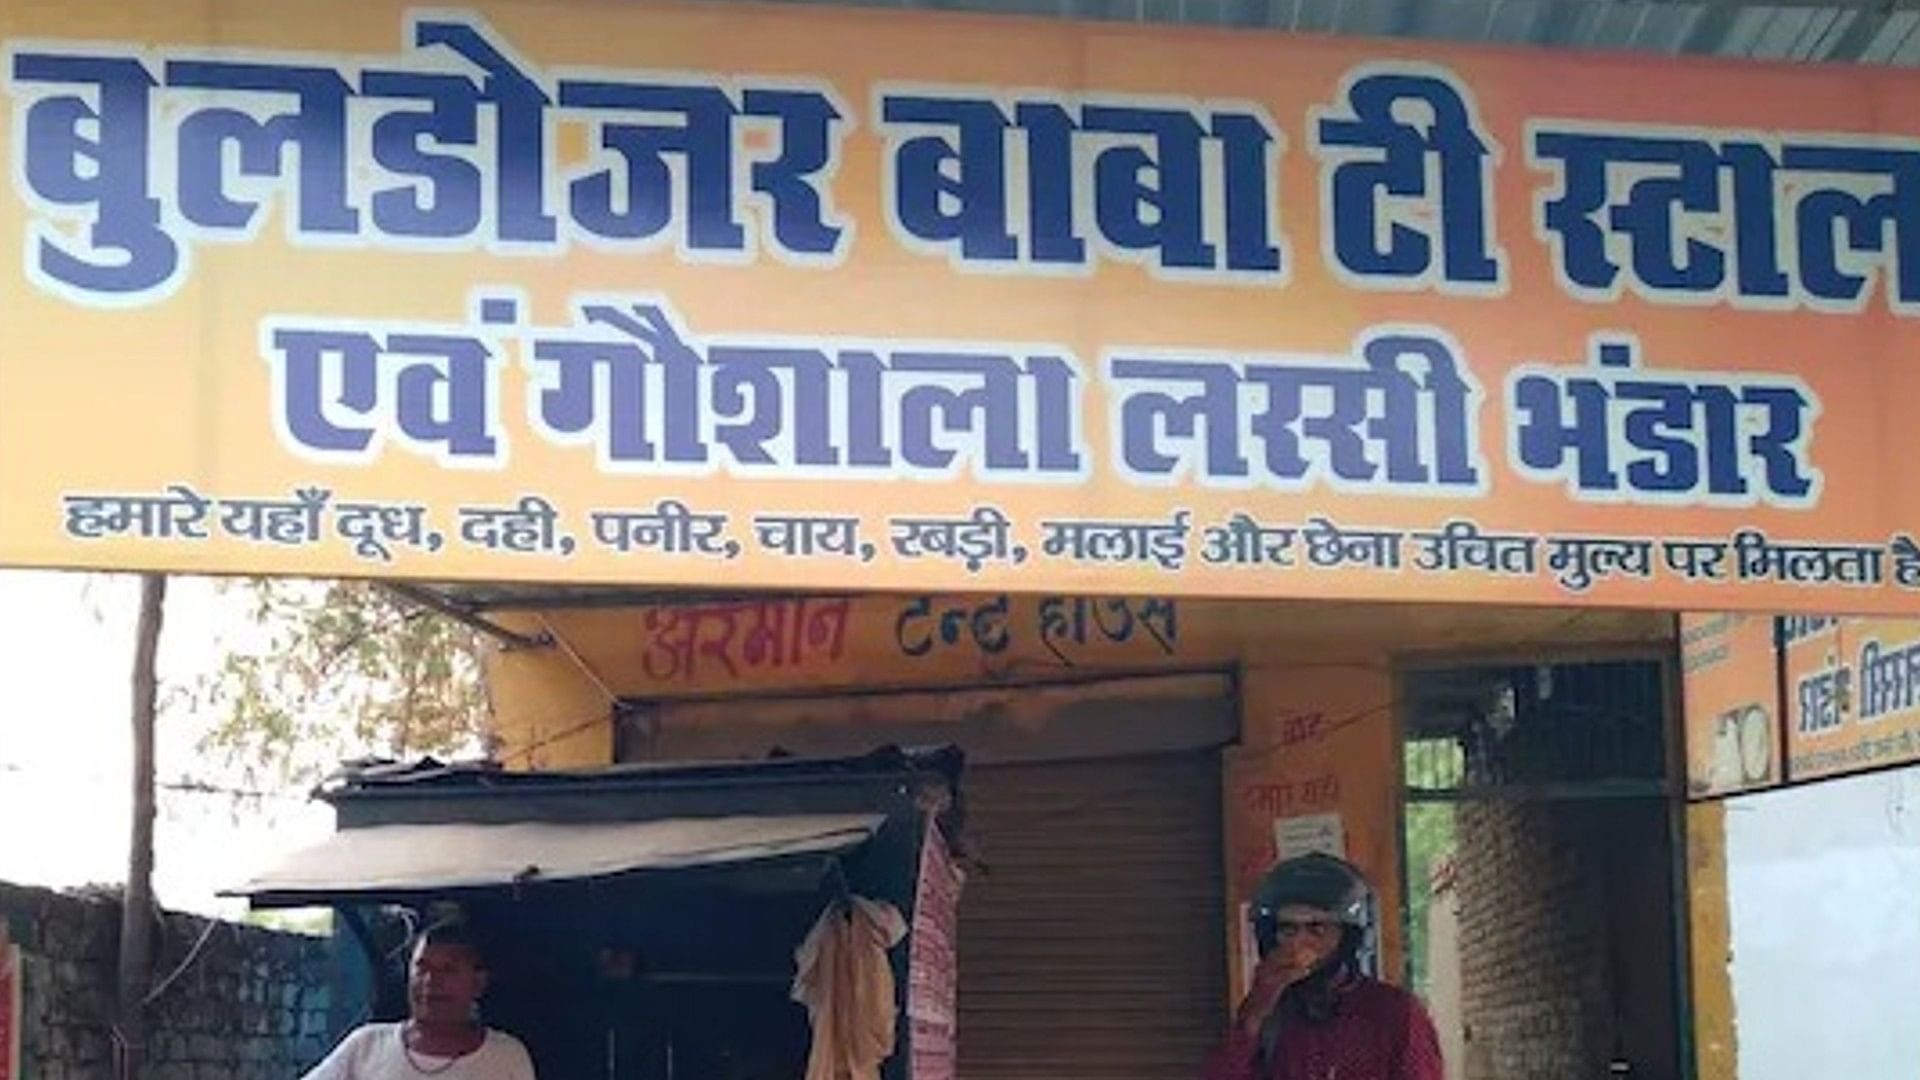 Chaiwala named his shop Bulldozer Baba Tea Stall know the reason behind it